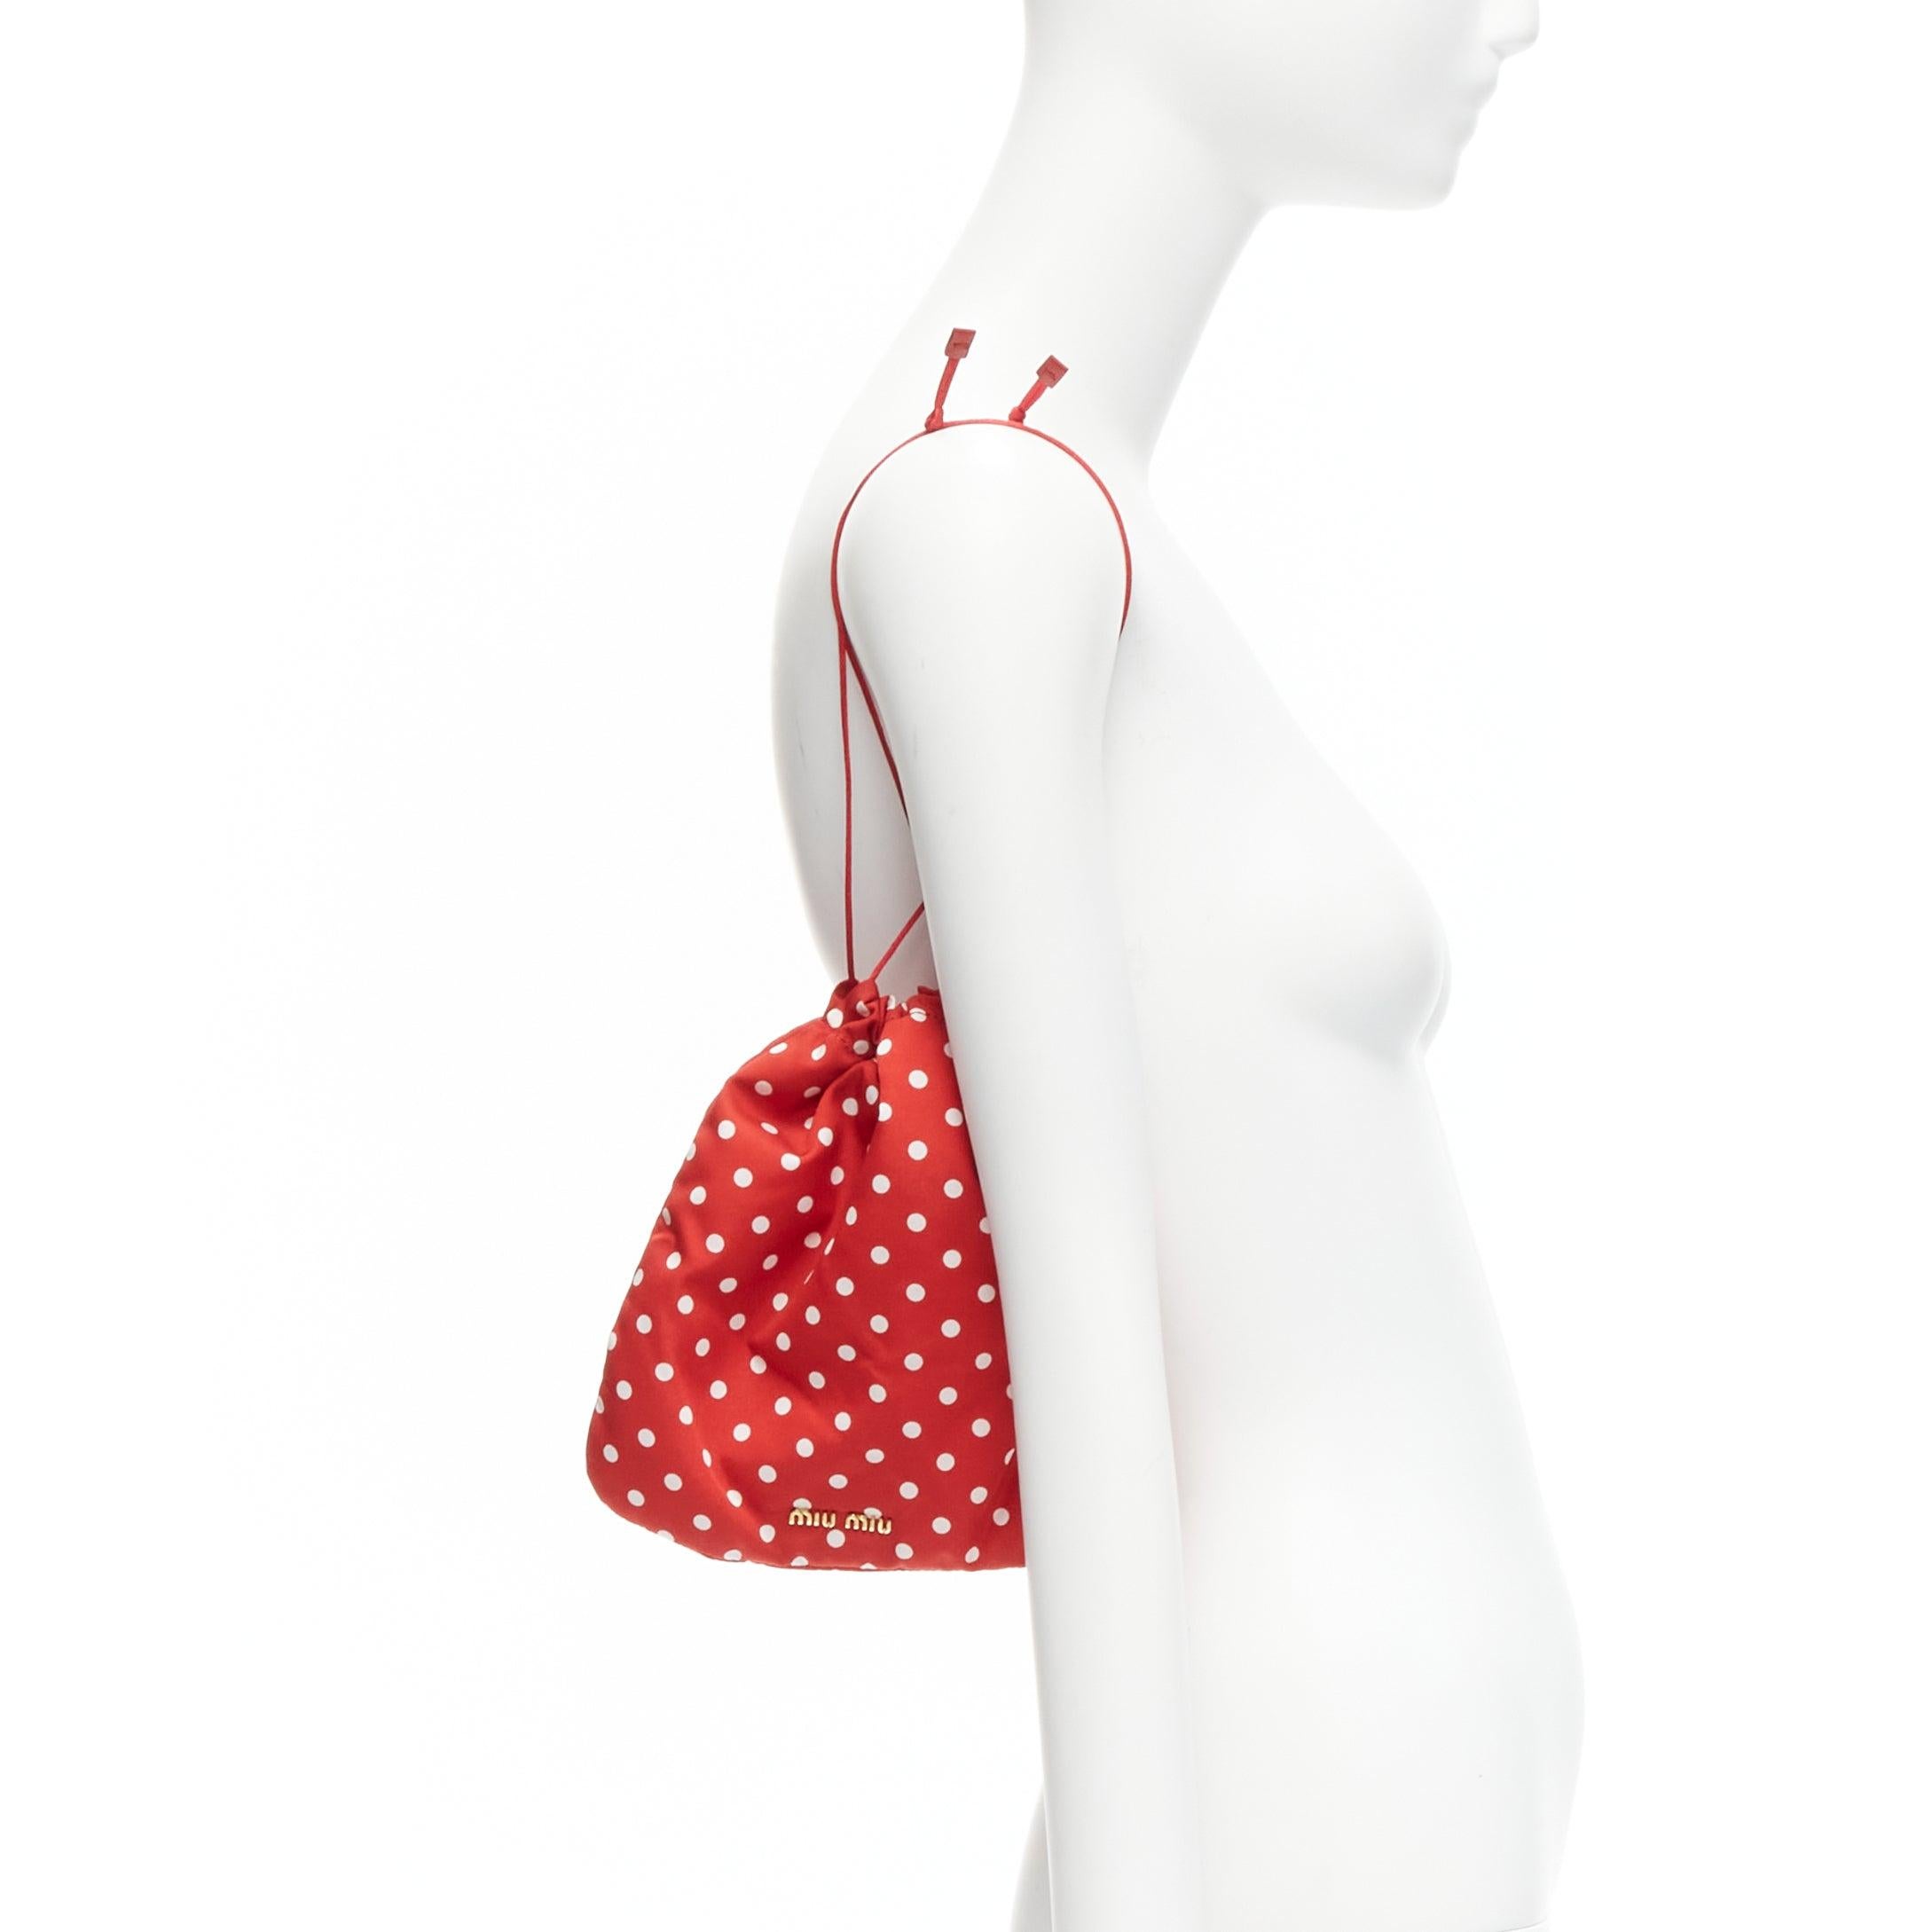 MIU MIU red white polka dot fully lined fabric drawstring pouch bag
Reference: BSHW/A00075
Brand: Miu Miu
Designer: Miuccia Prada
Material: Feels like nylon
Color: Red, White
Pattern: Polka Dot
Closure: Drawstring
Lining: Red Fabric
Extra Details: